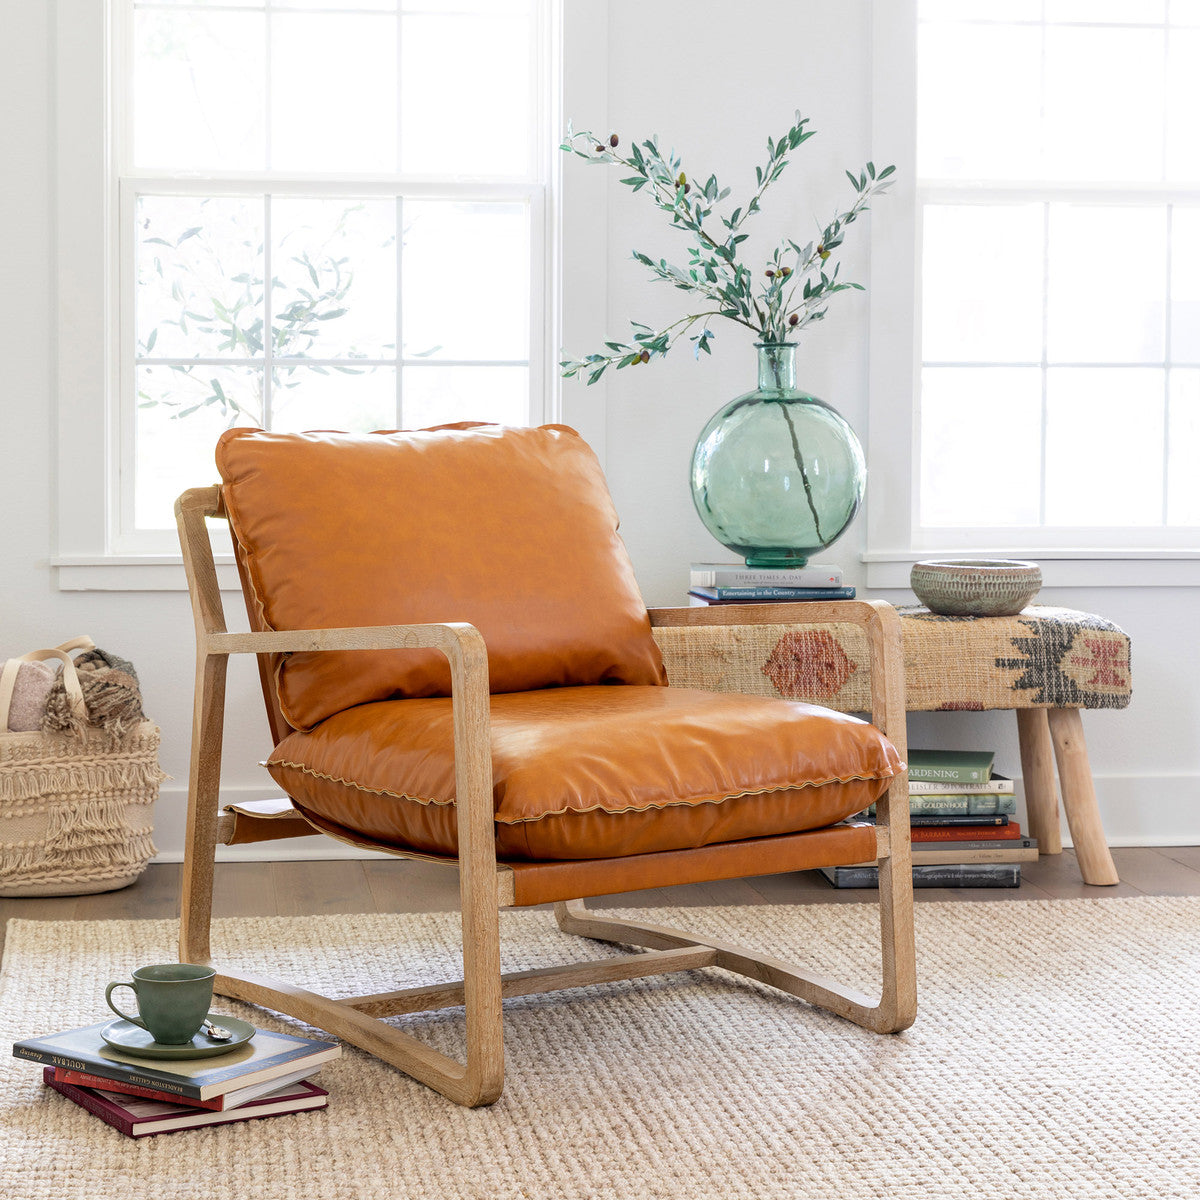 modern vegan leather brawn chair in cozy nook near windows